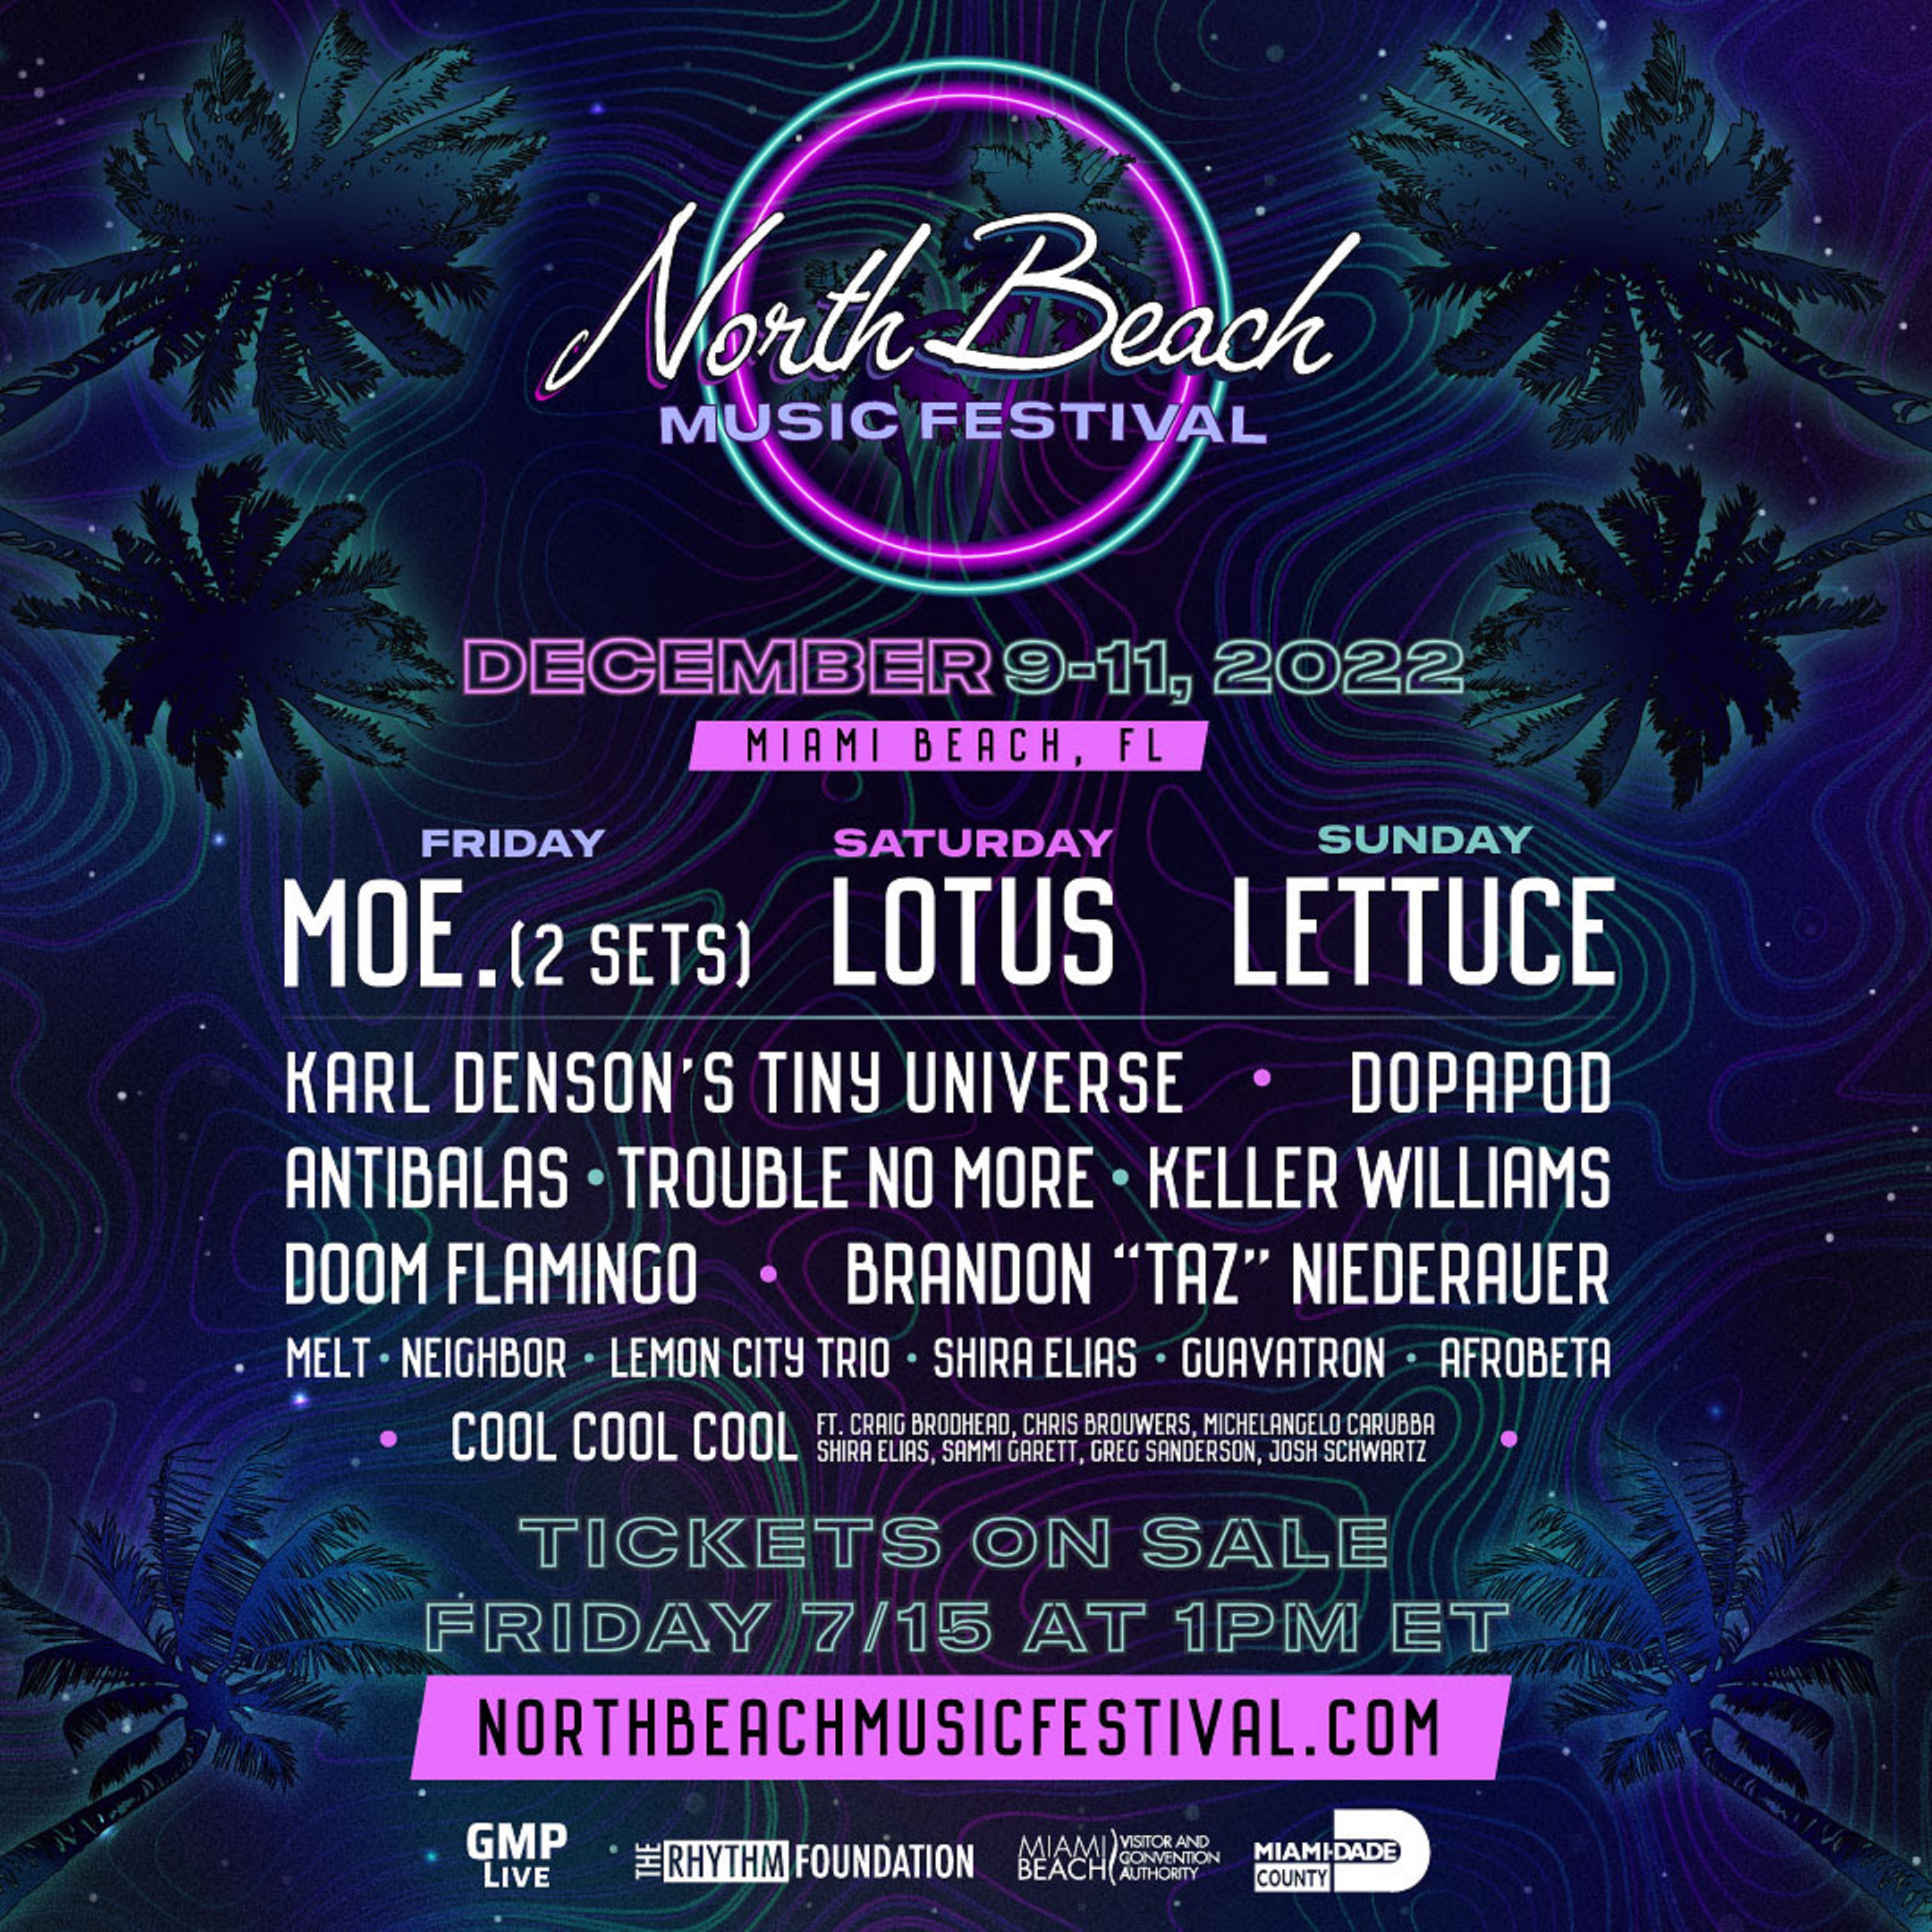 North Beach Music Festival Returns This December!